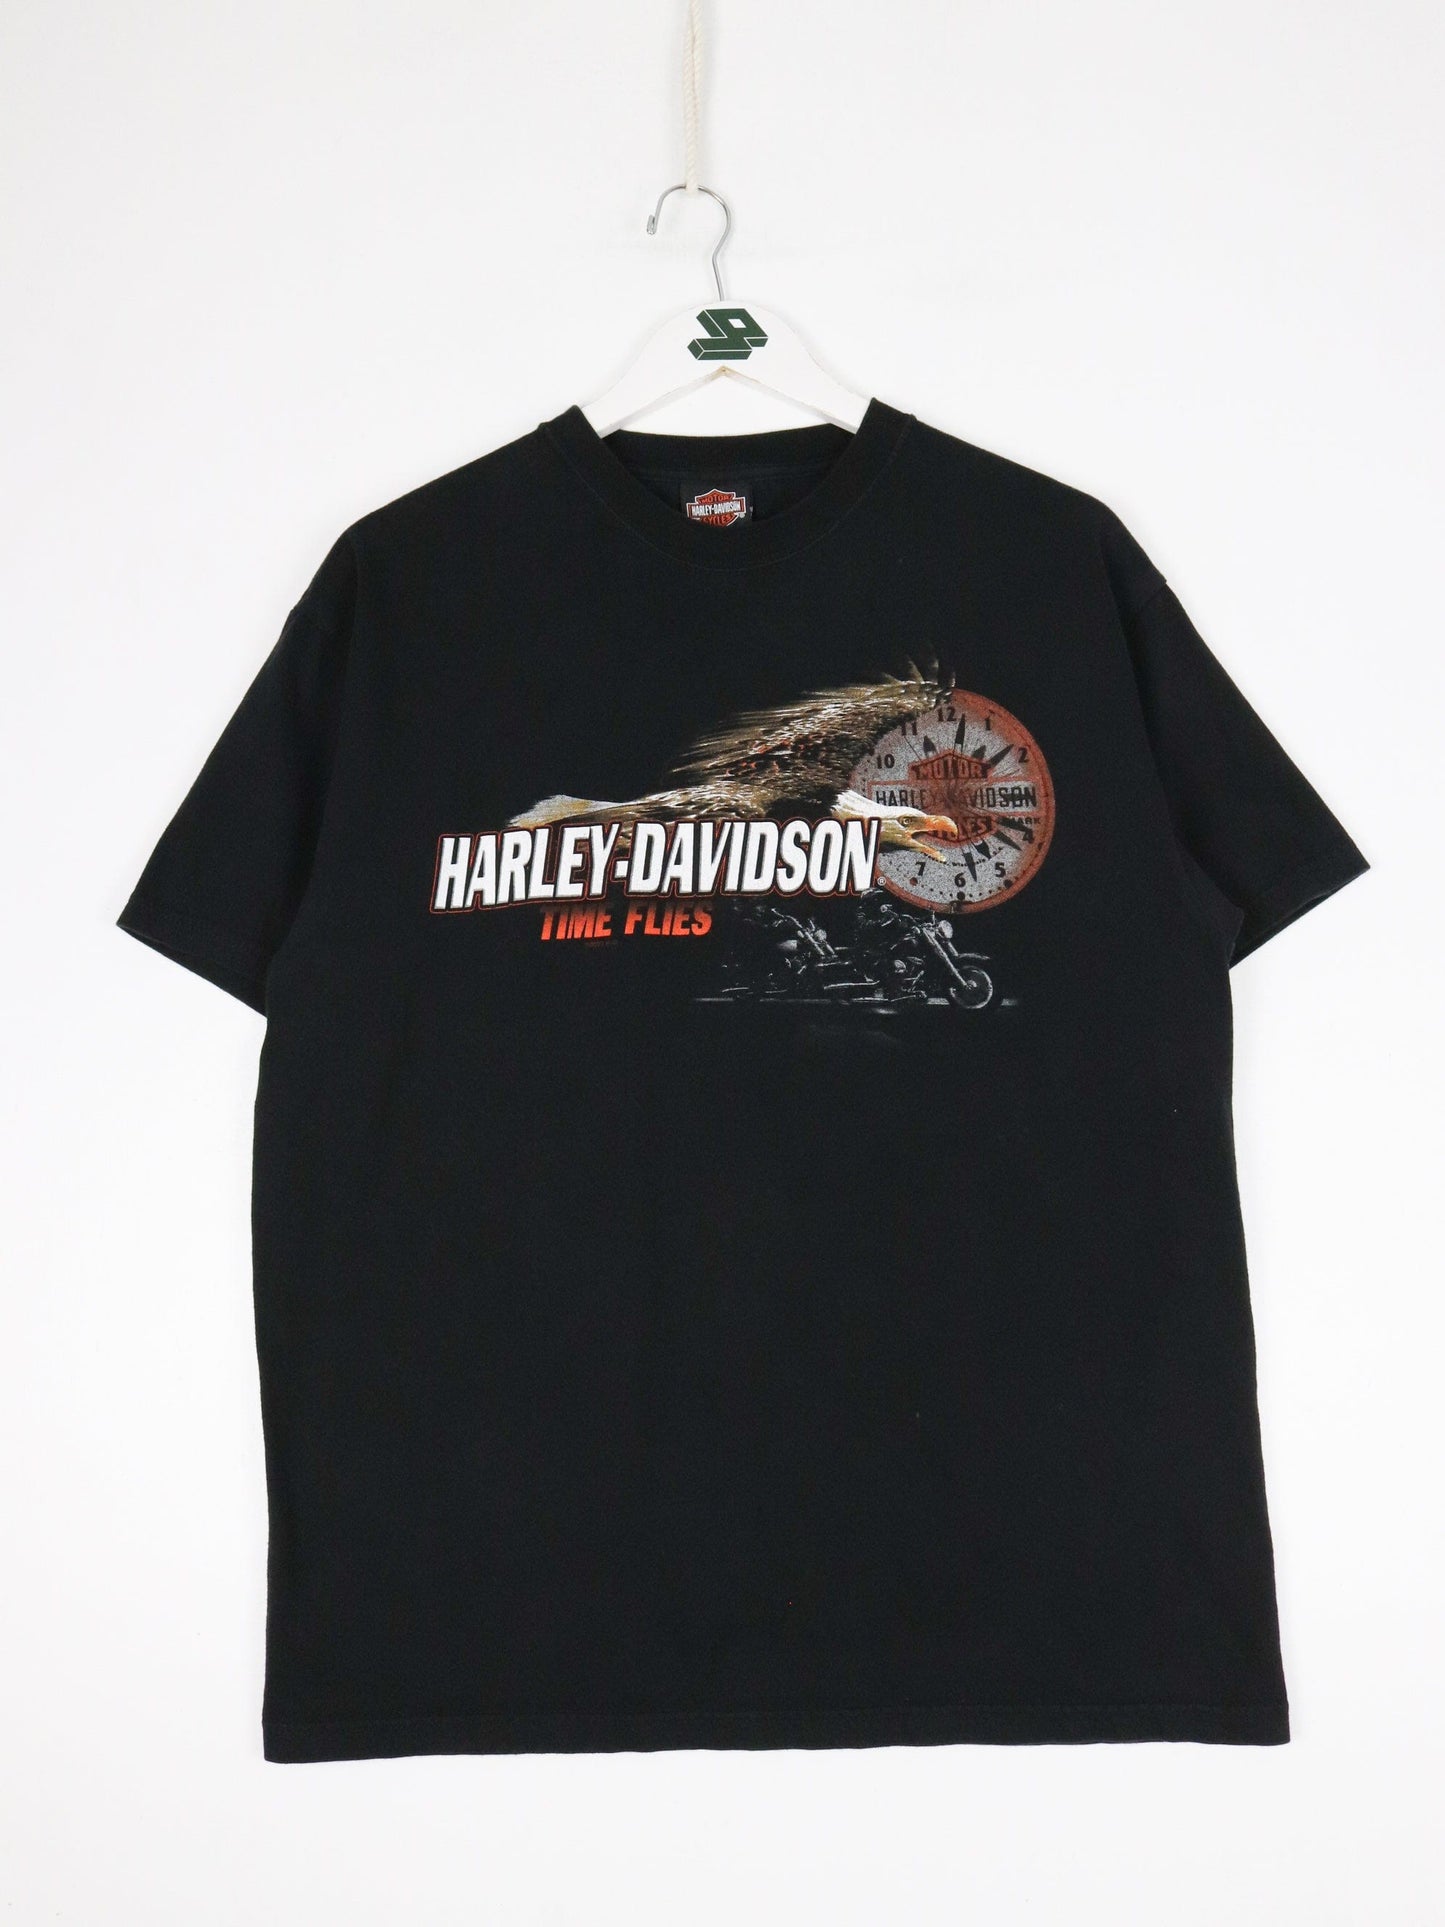 Harley Davidson T-Shirts & Tank Tops Harley Davidson T Shirt Mens Large Black Biker Motorcycles